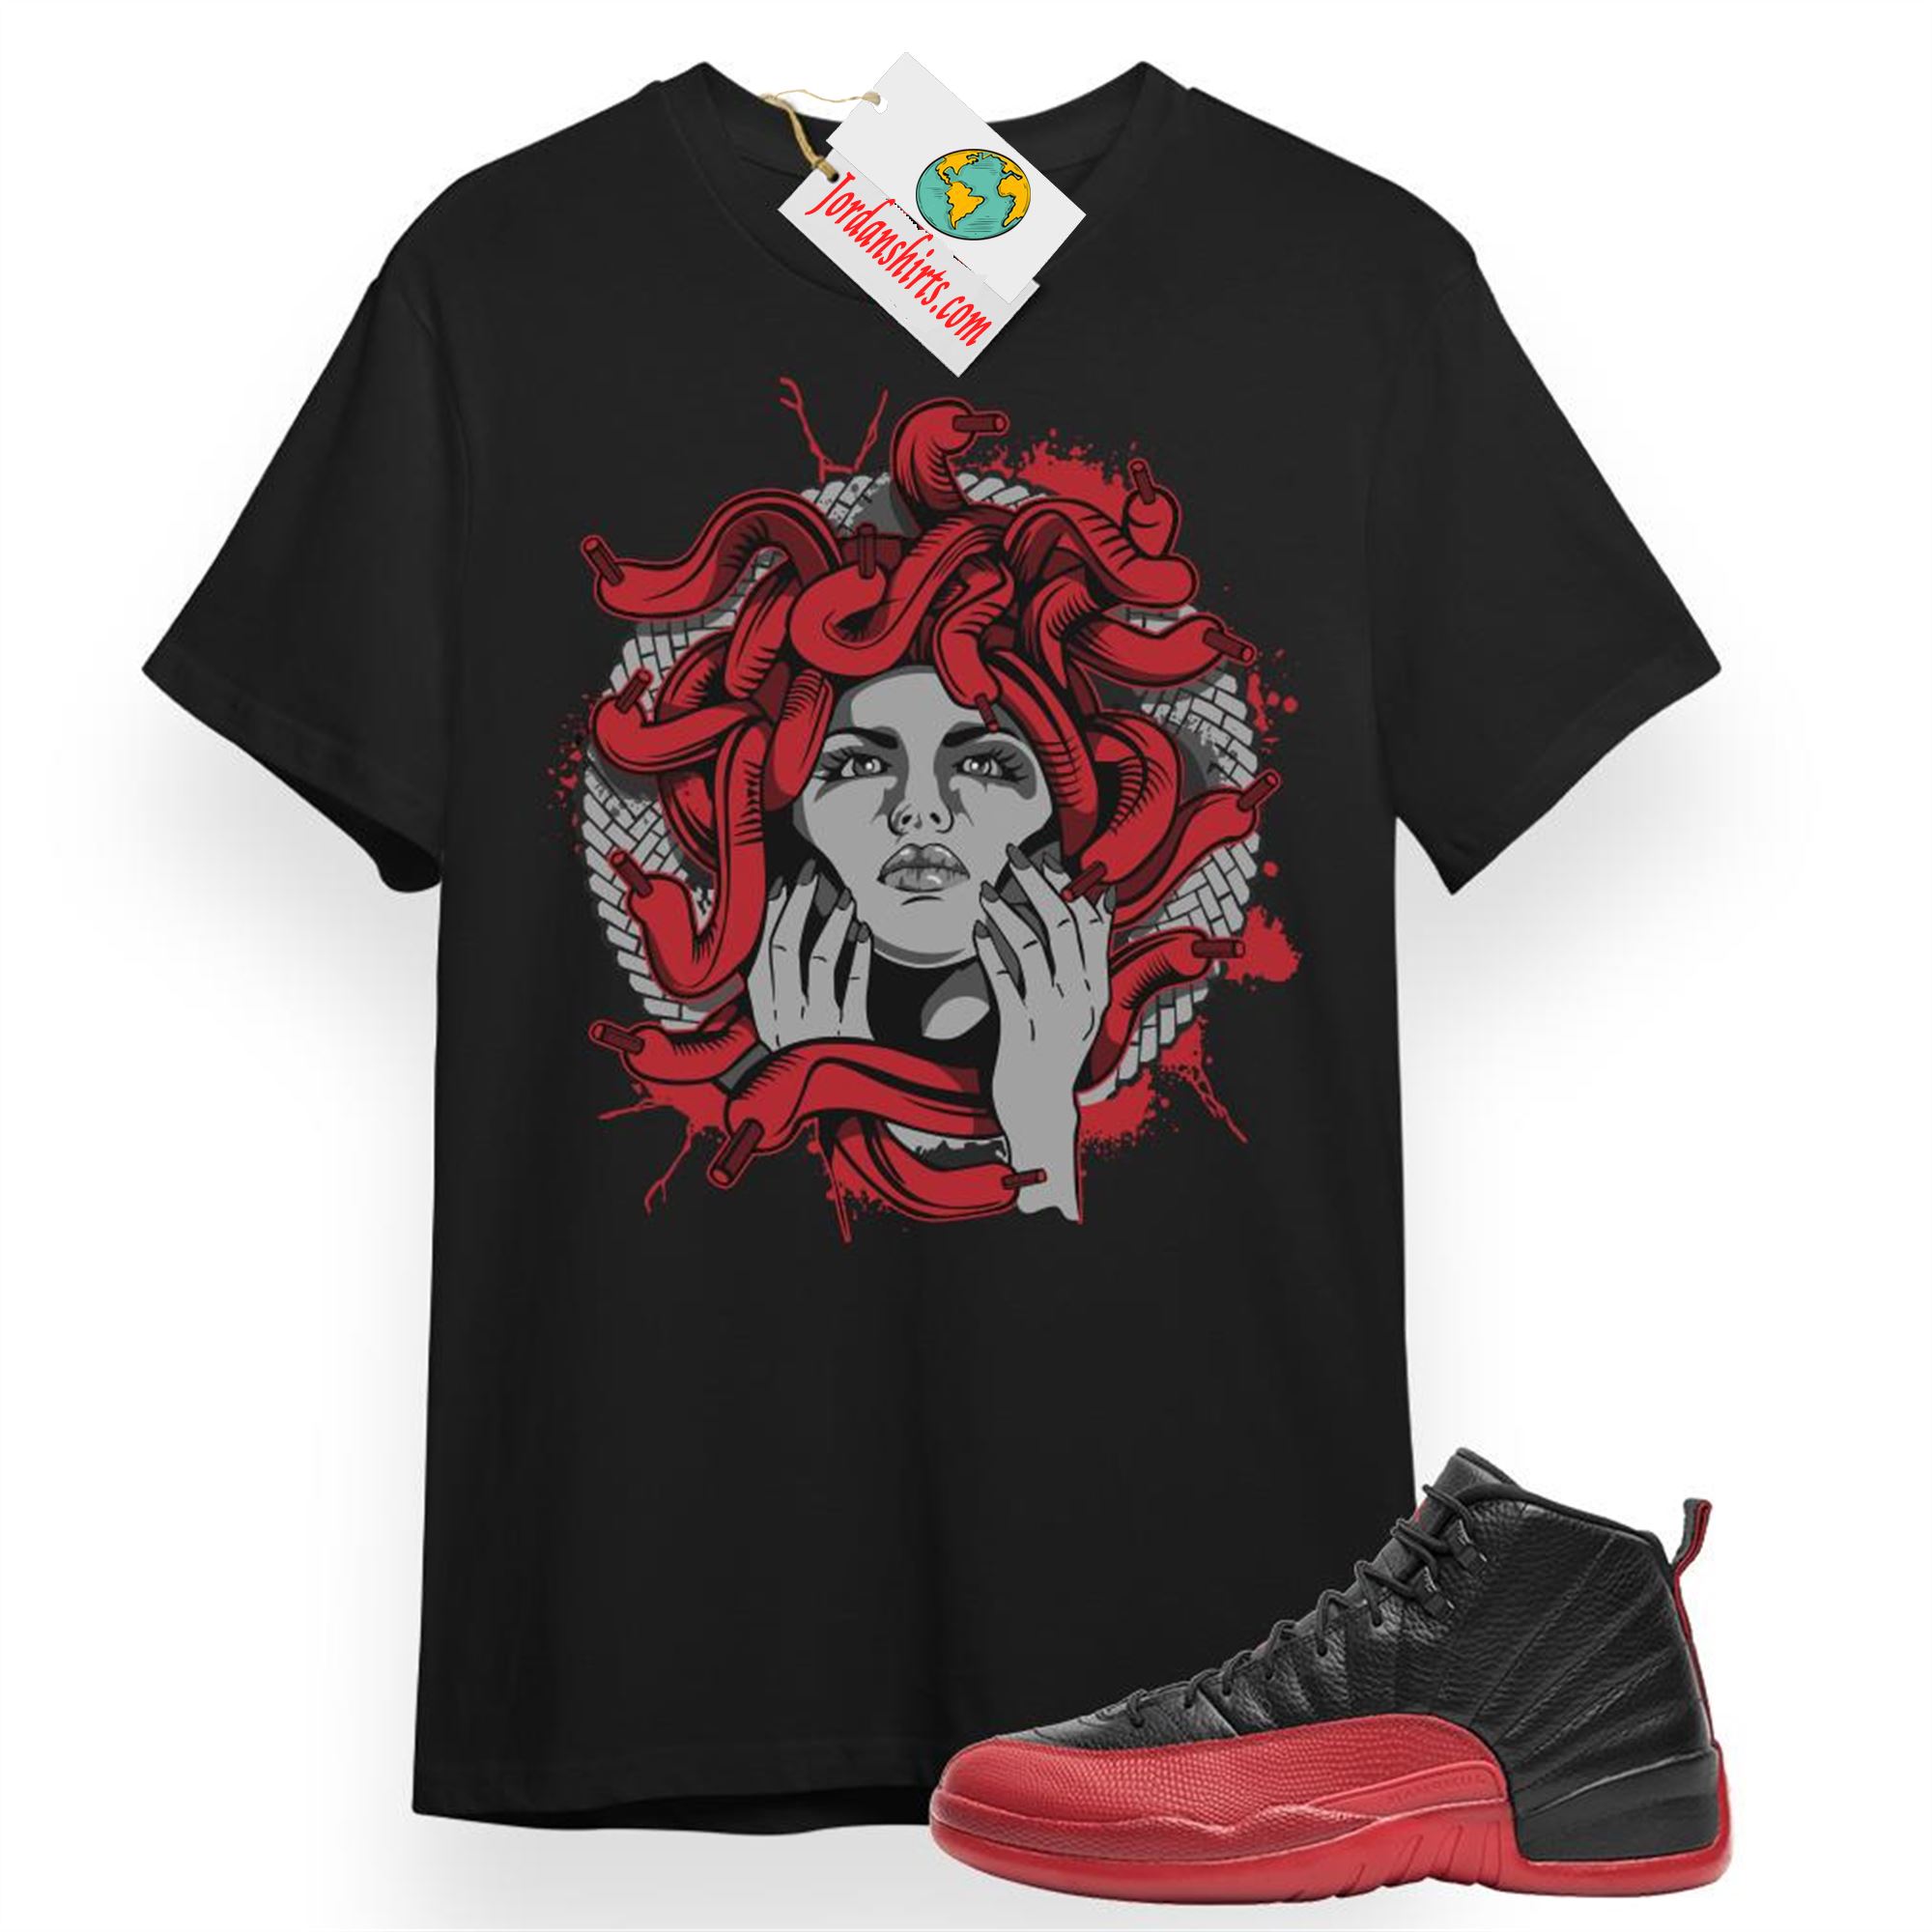 Jordan 12 Shirt, Medusa Black T-shirt Air Jordan 12 Flu Game 12s Size Up To 5xl